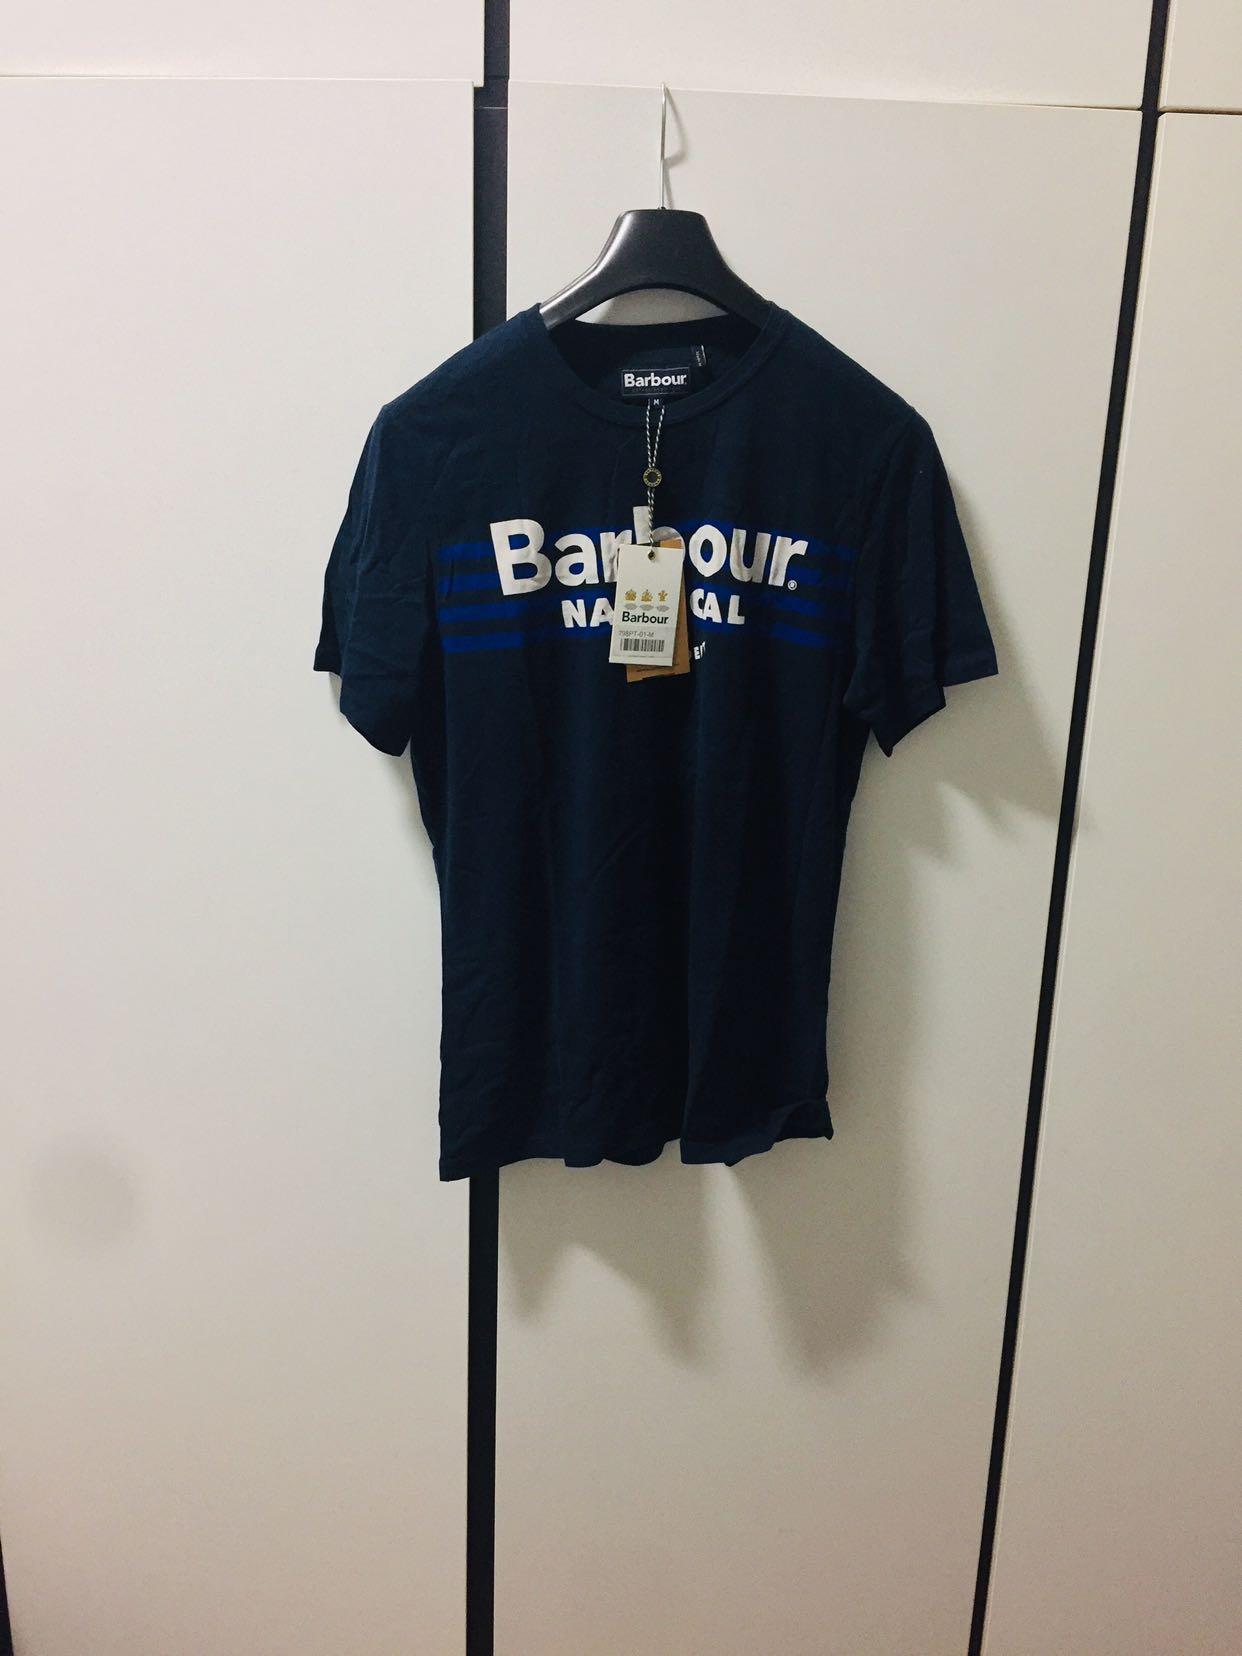 BNWT Barbour Nautical Navy Tee Shirt 